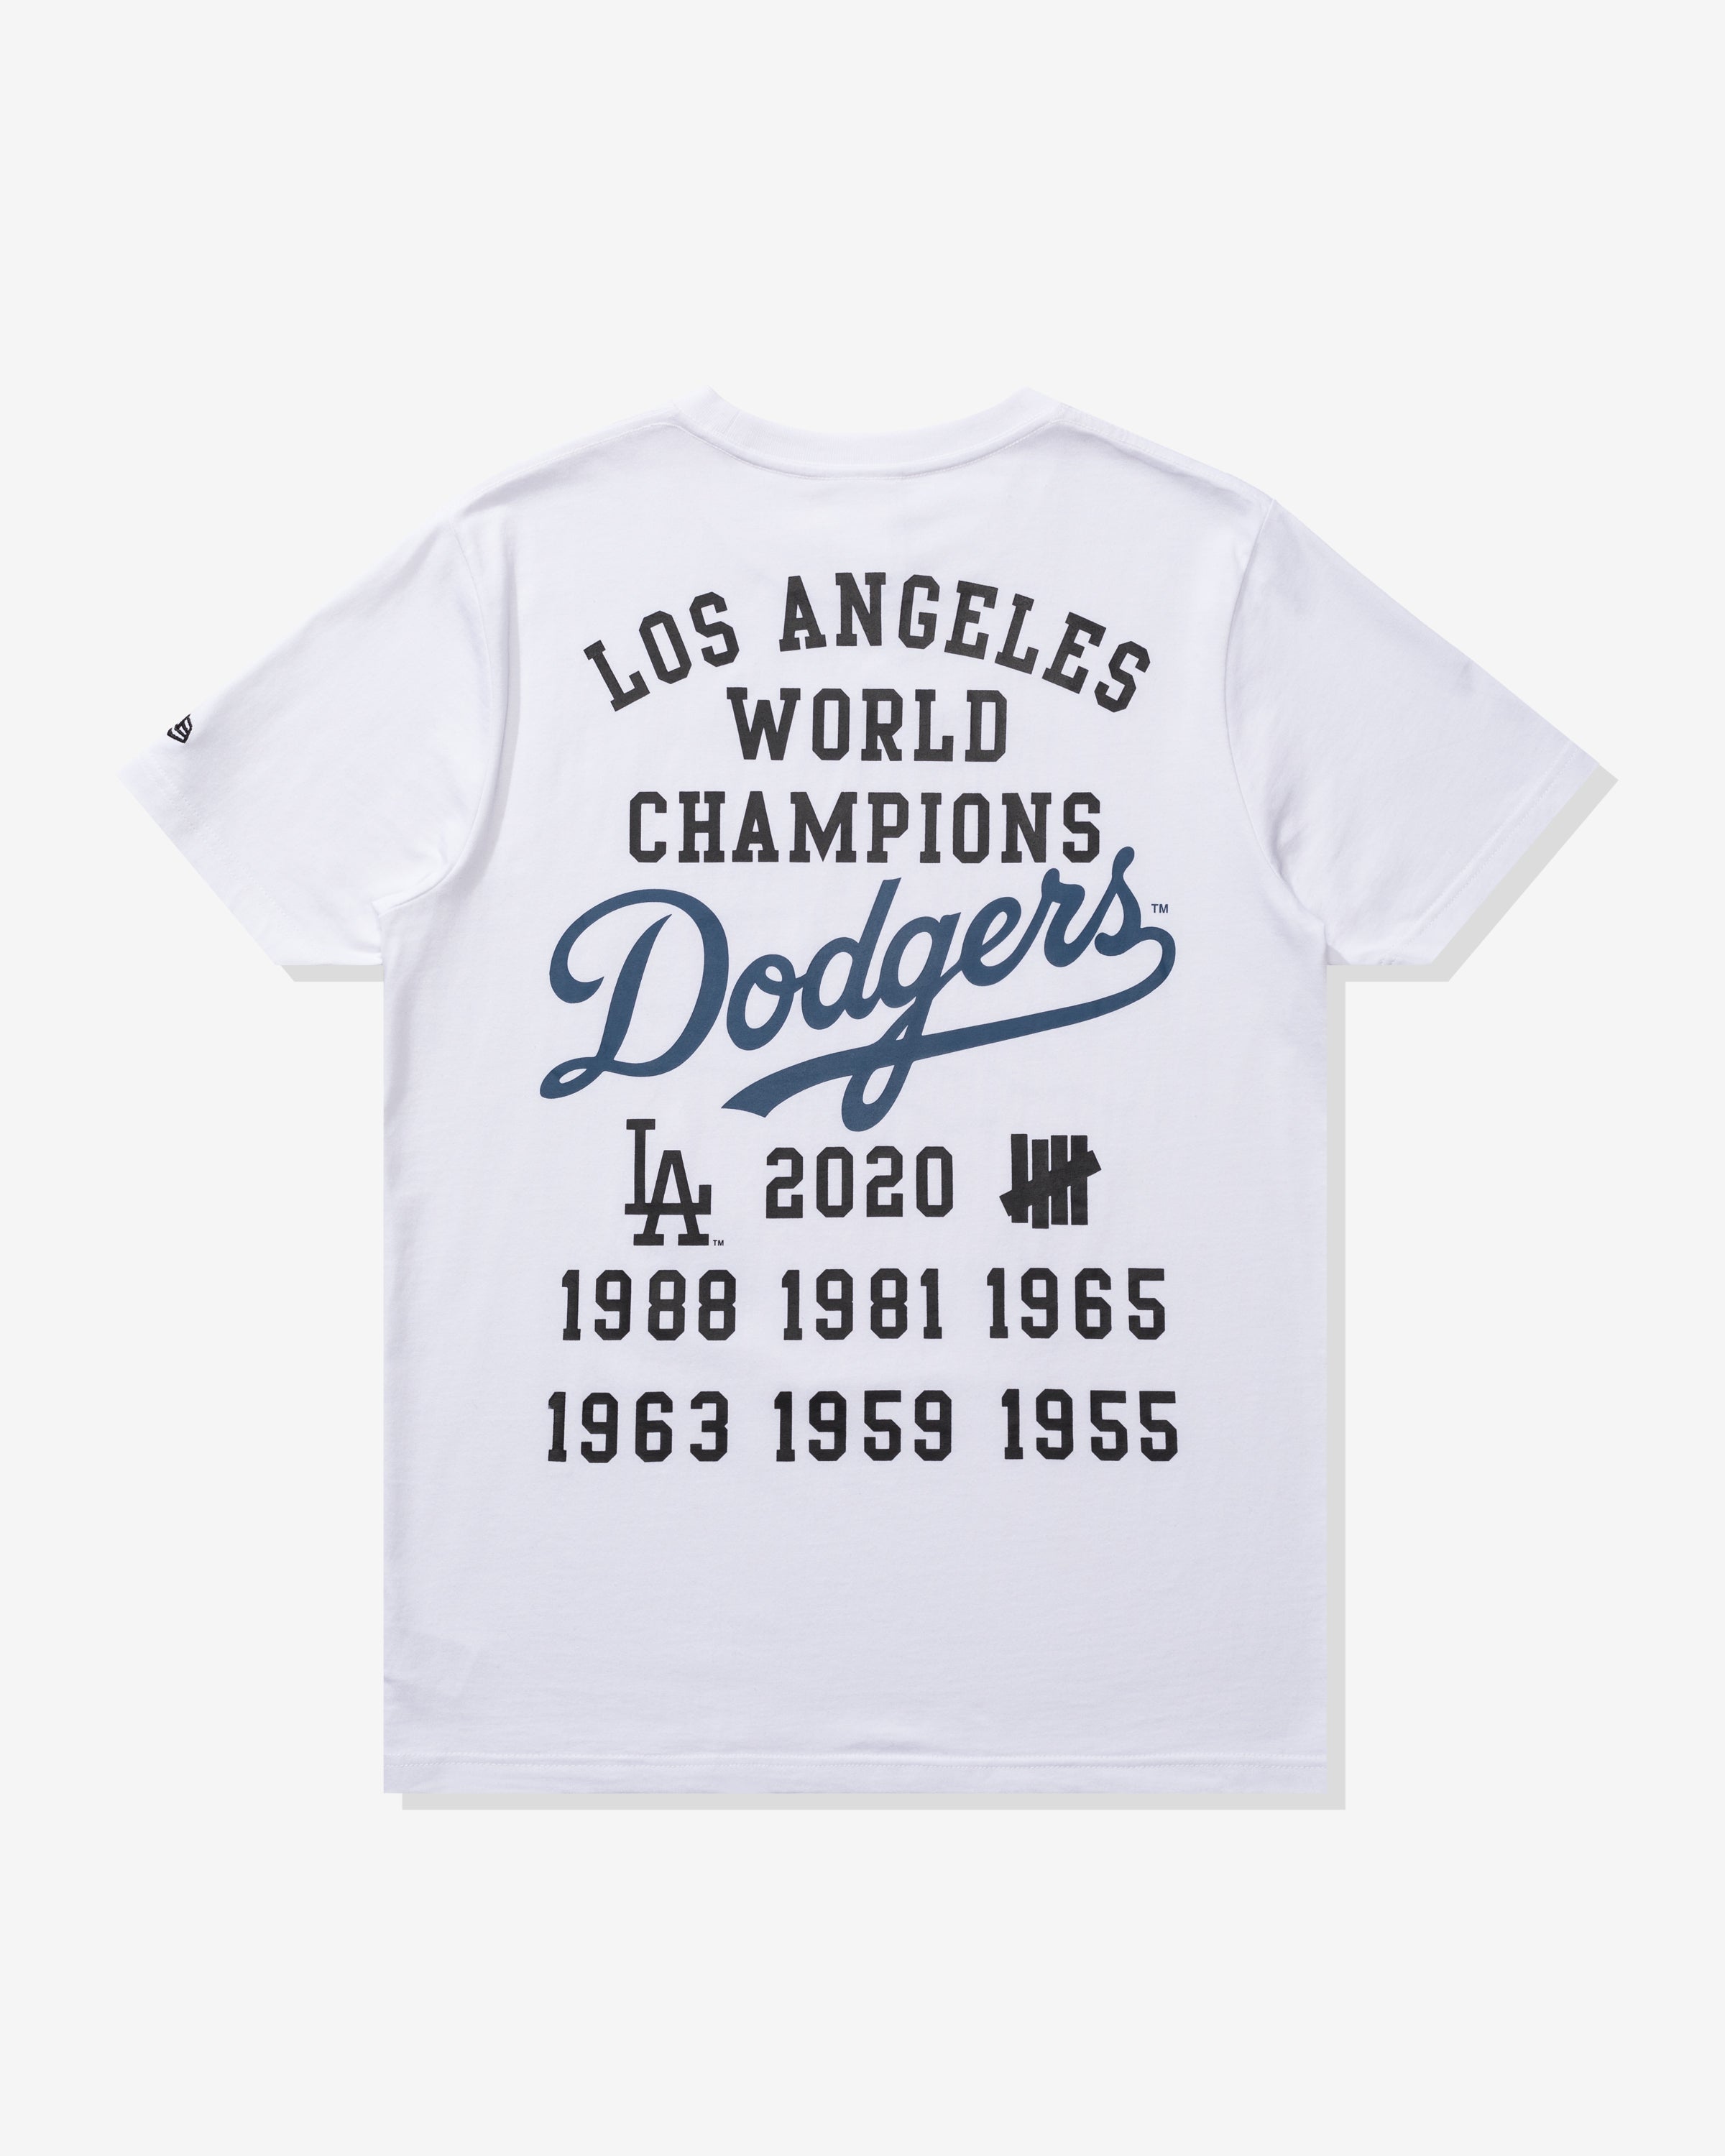 New Era Los Angeles Dodgers Champions Mens Short Sleeve Shirt (Beige)